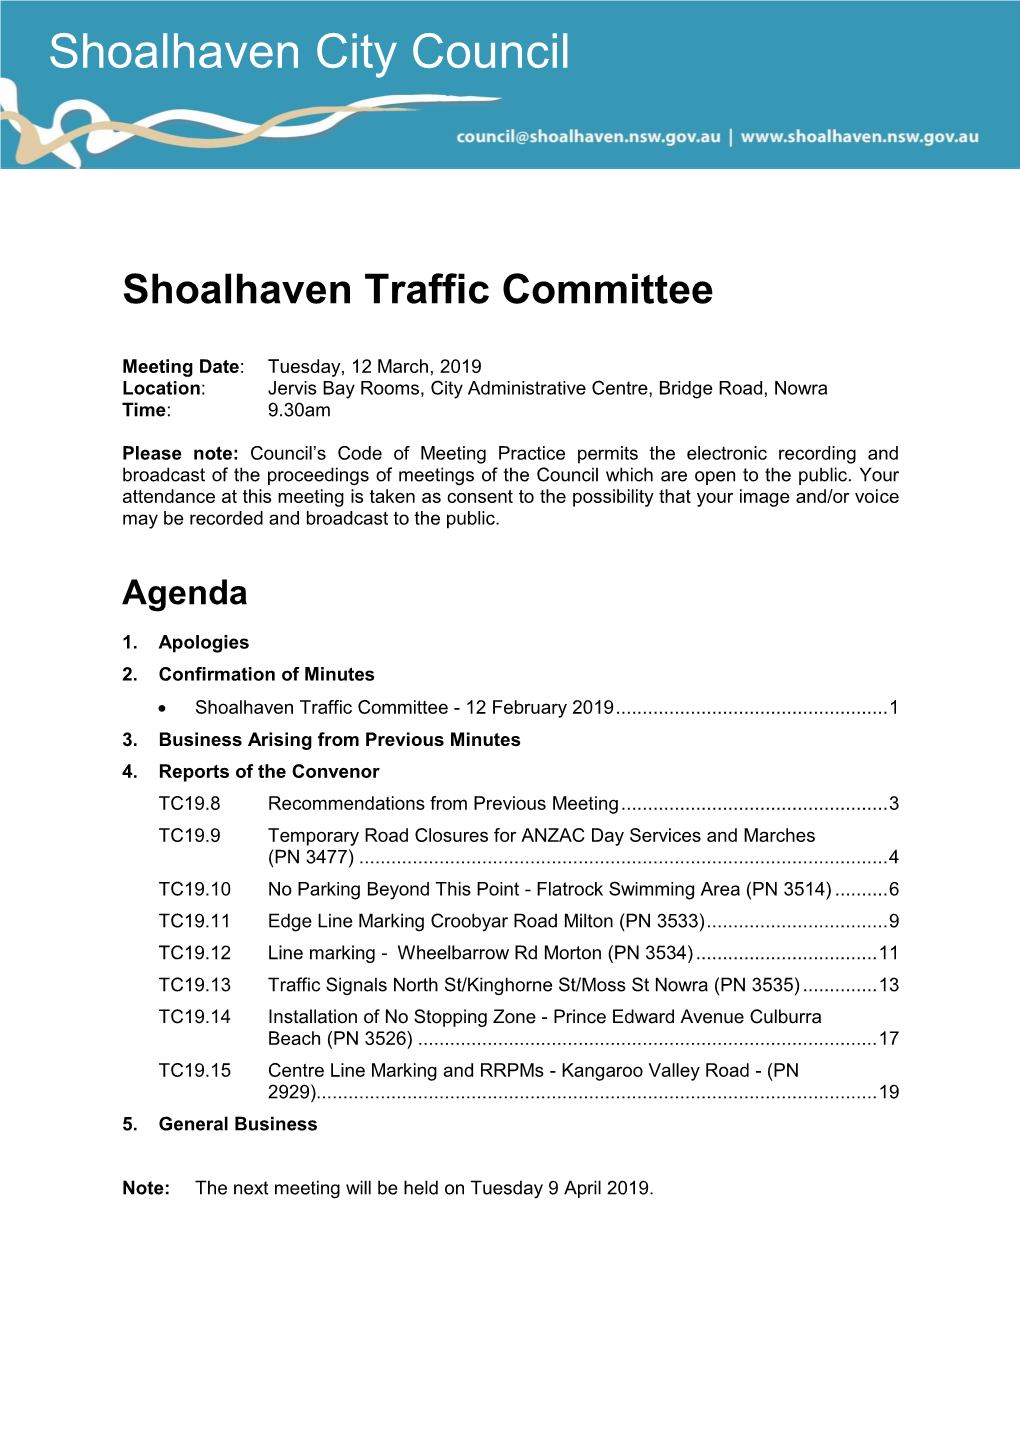 Agenda of Shoalhaven Traffic Committee